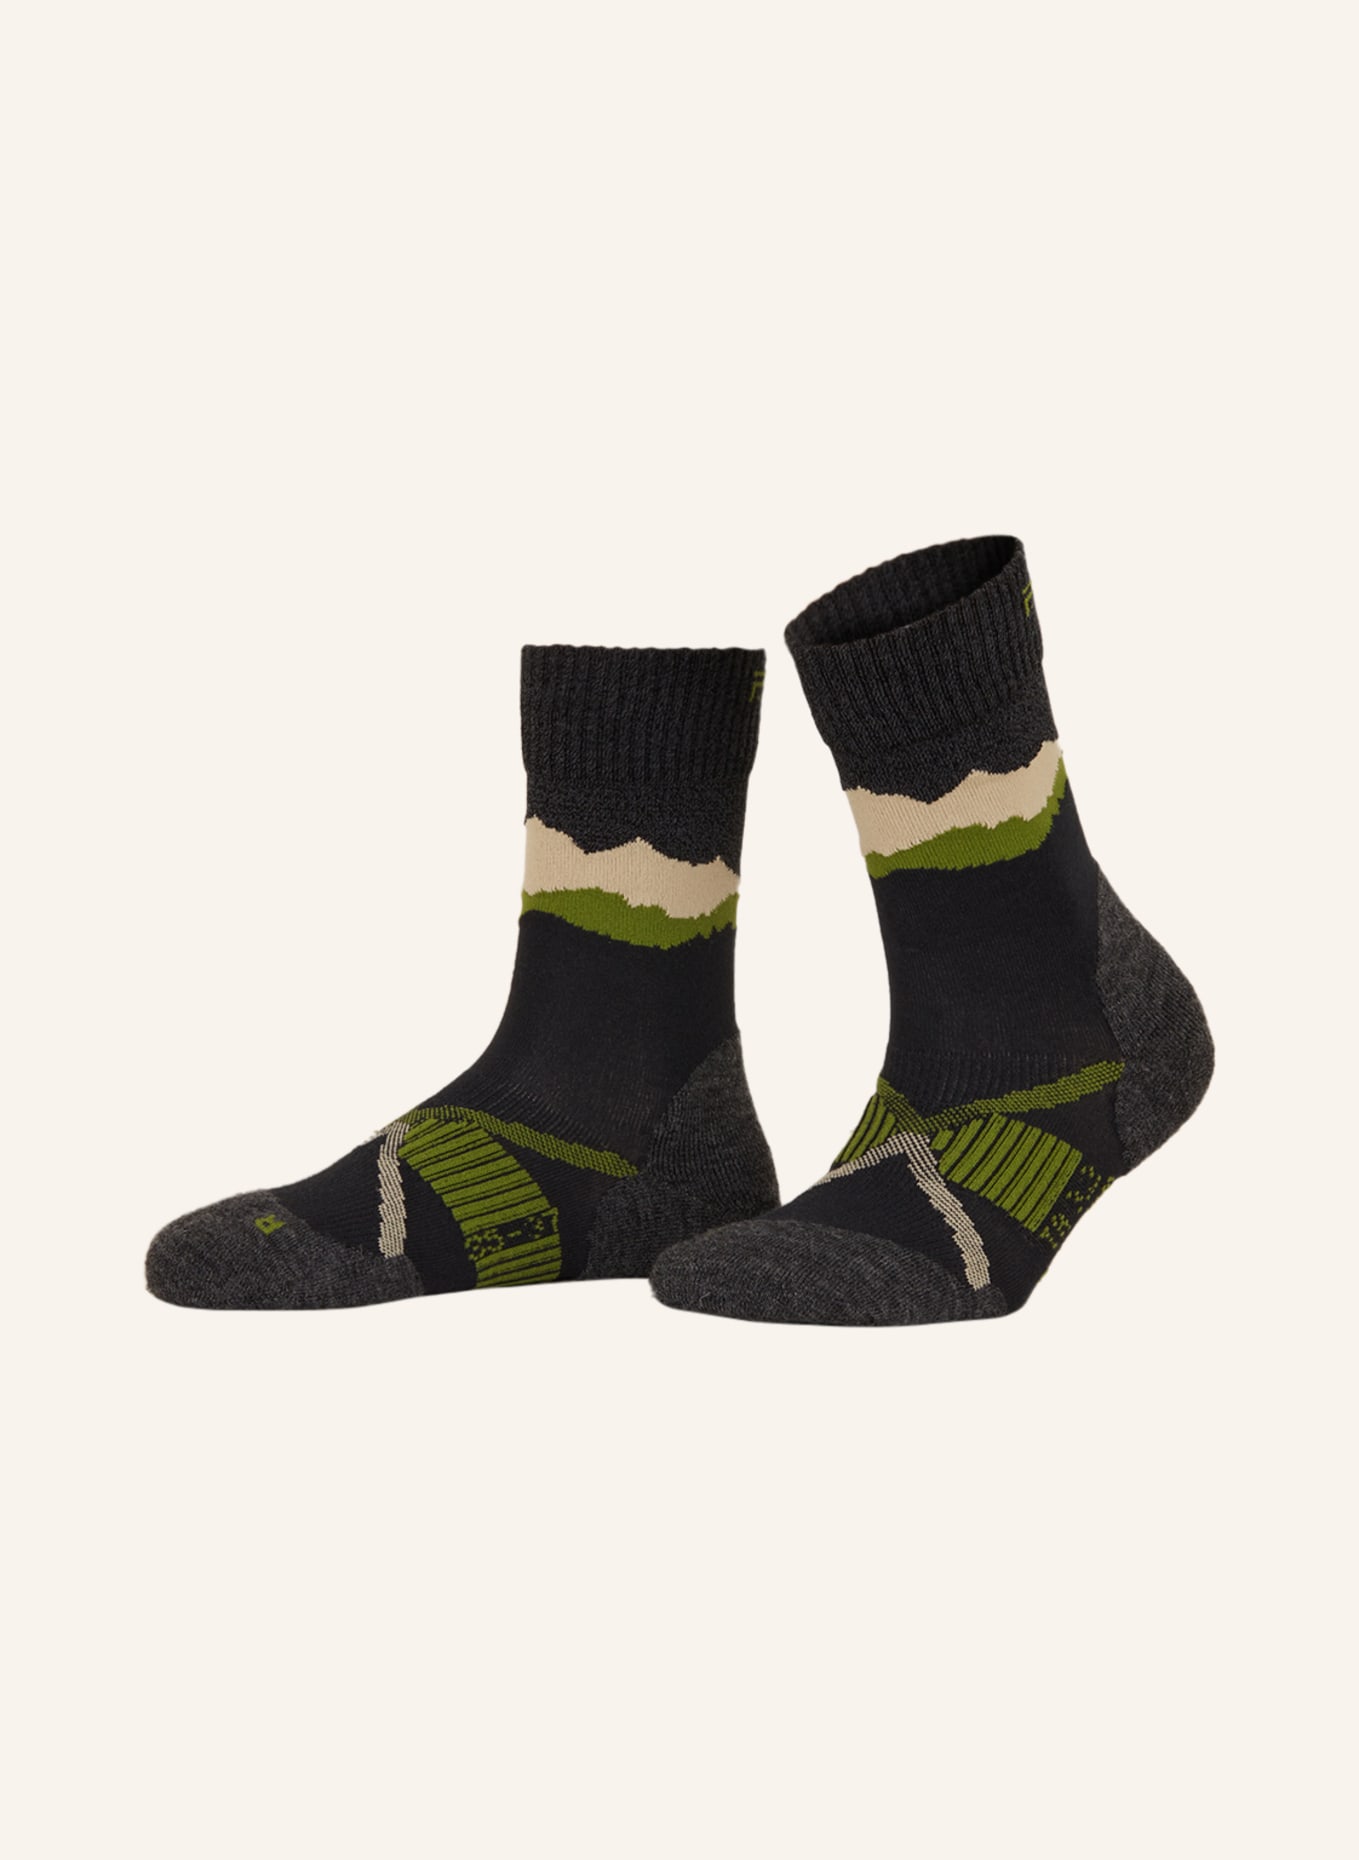 P.A.C. Trekking-Socken TR 3.2 LIGHT, Farbe: 222 Anthracite-Olive (Bild 1)